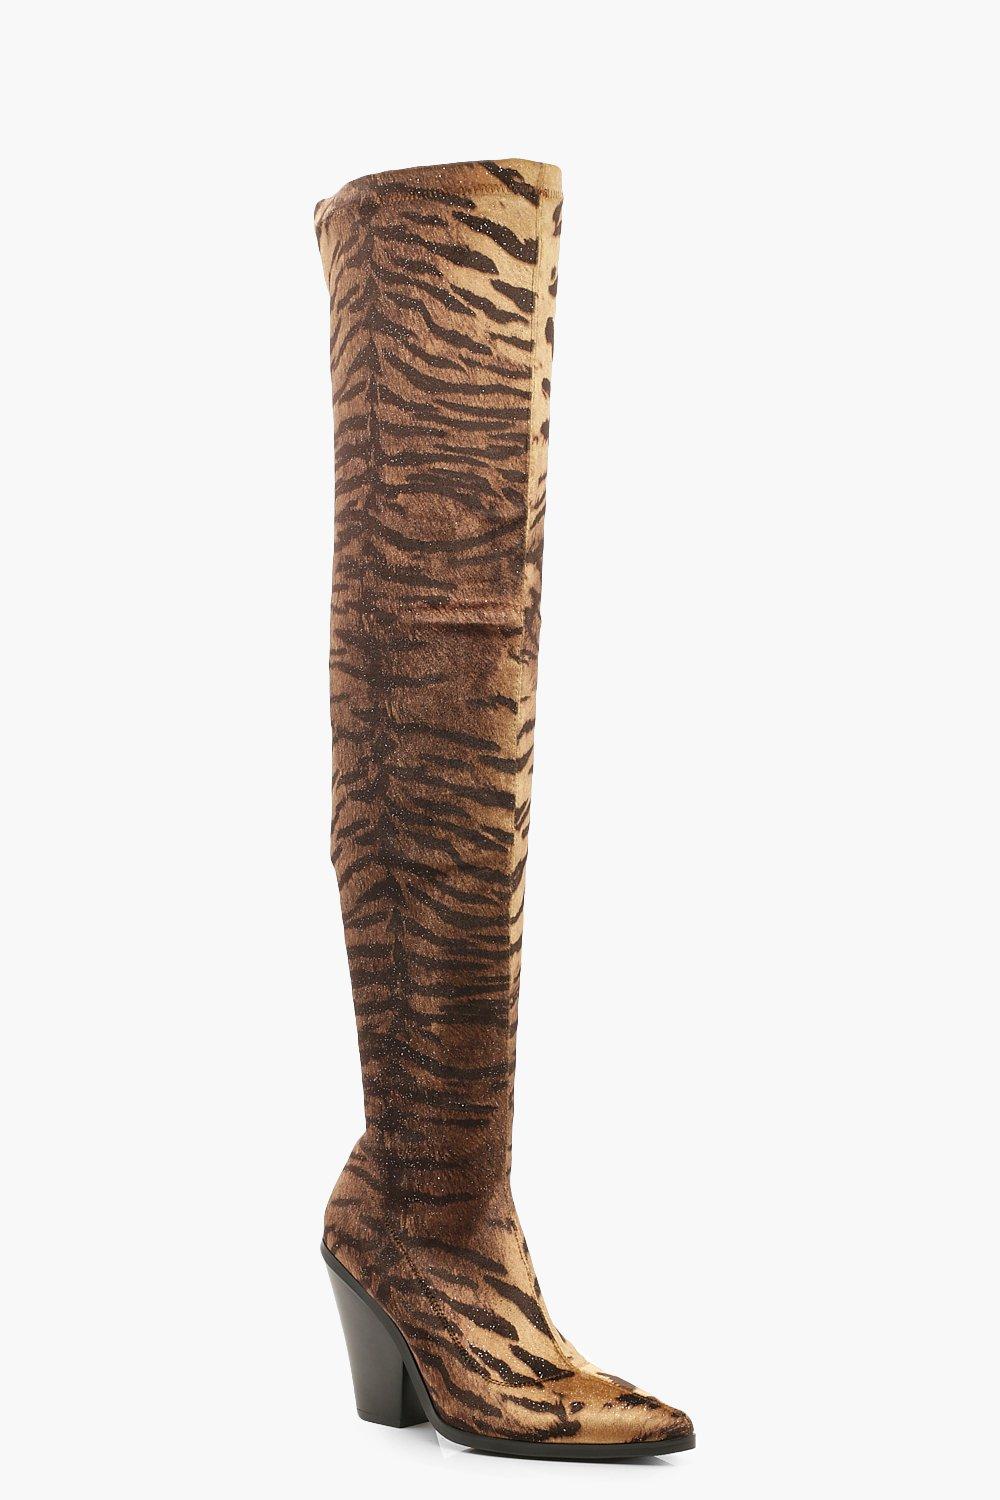 Tiger Print Knee High Cowboy Boots 